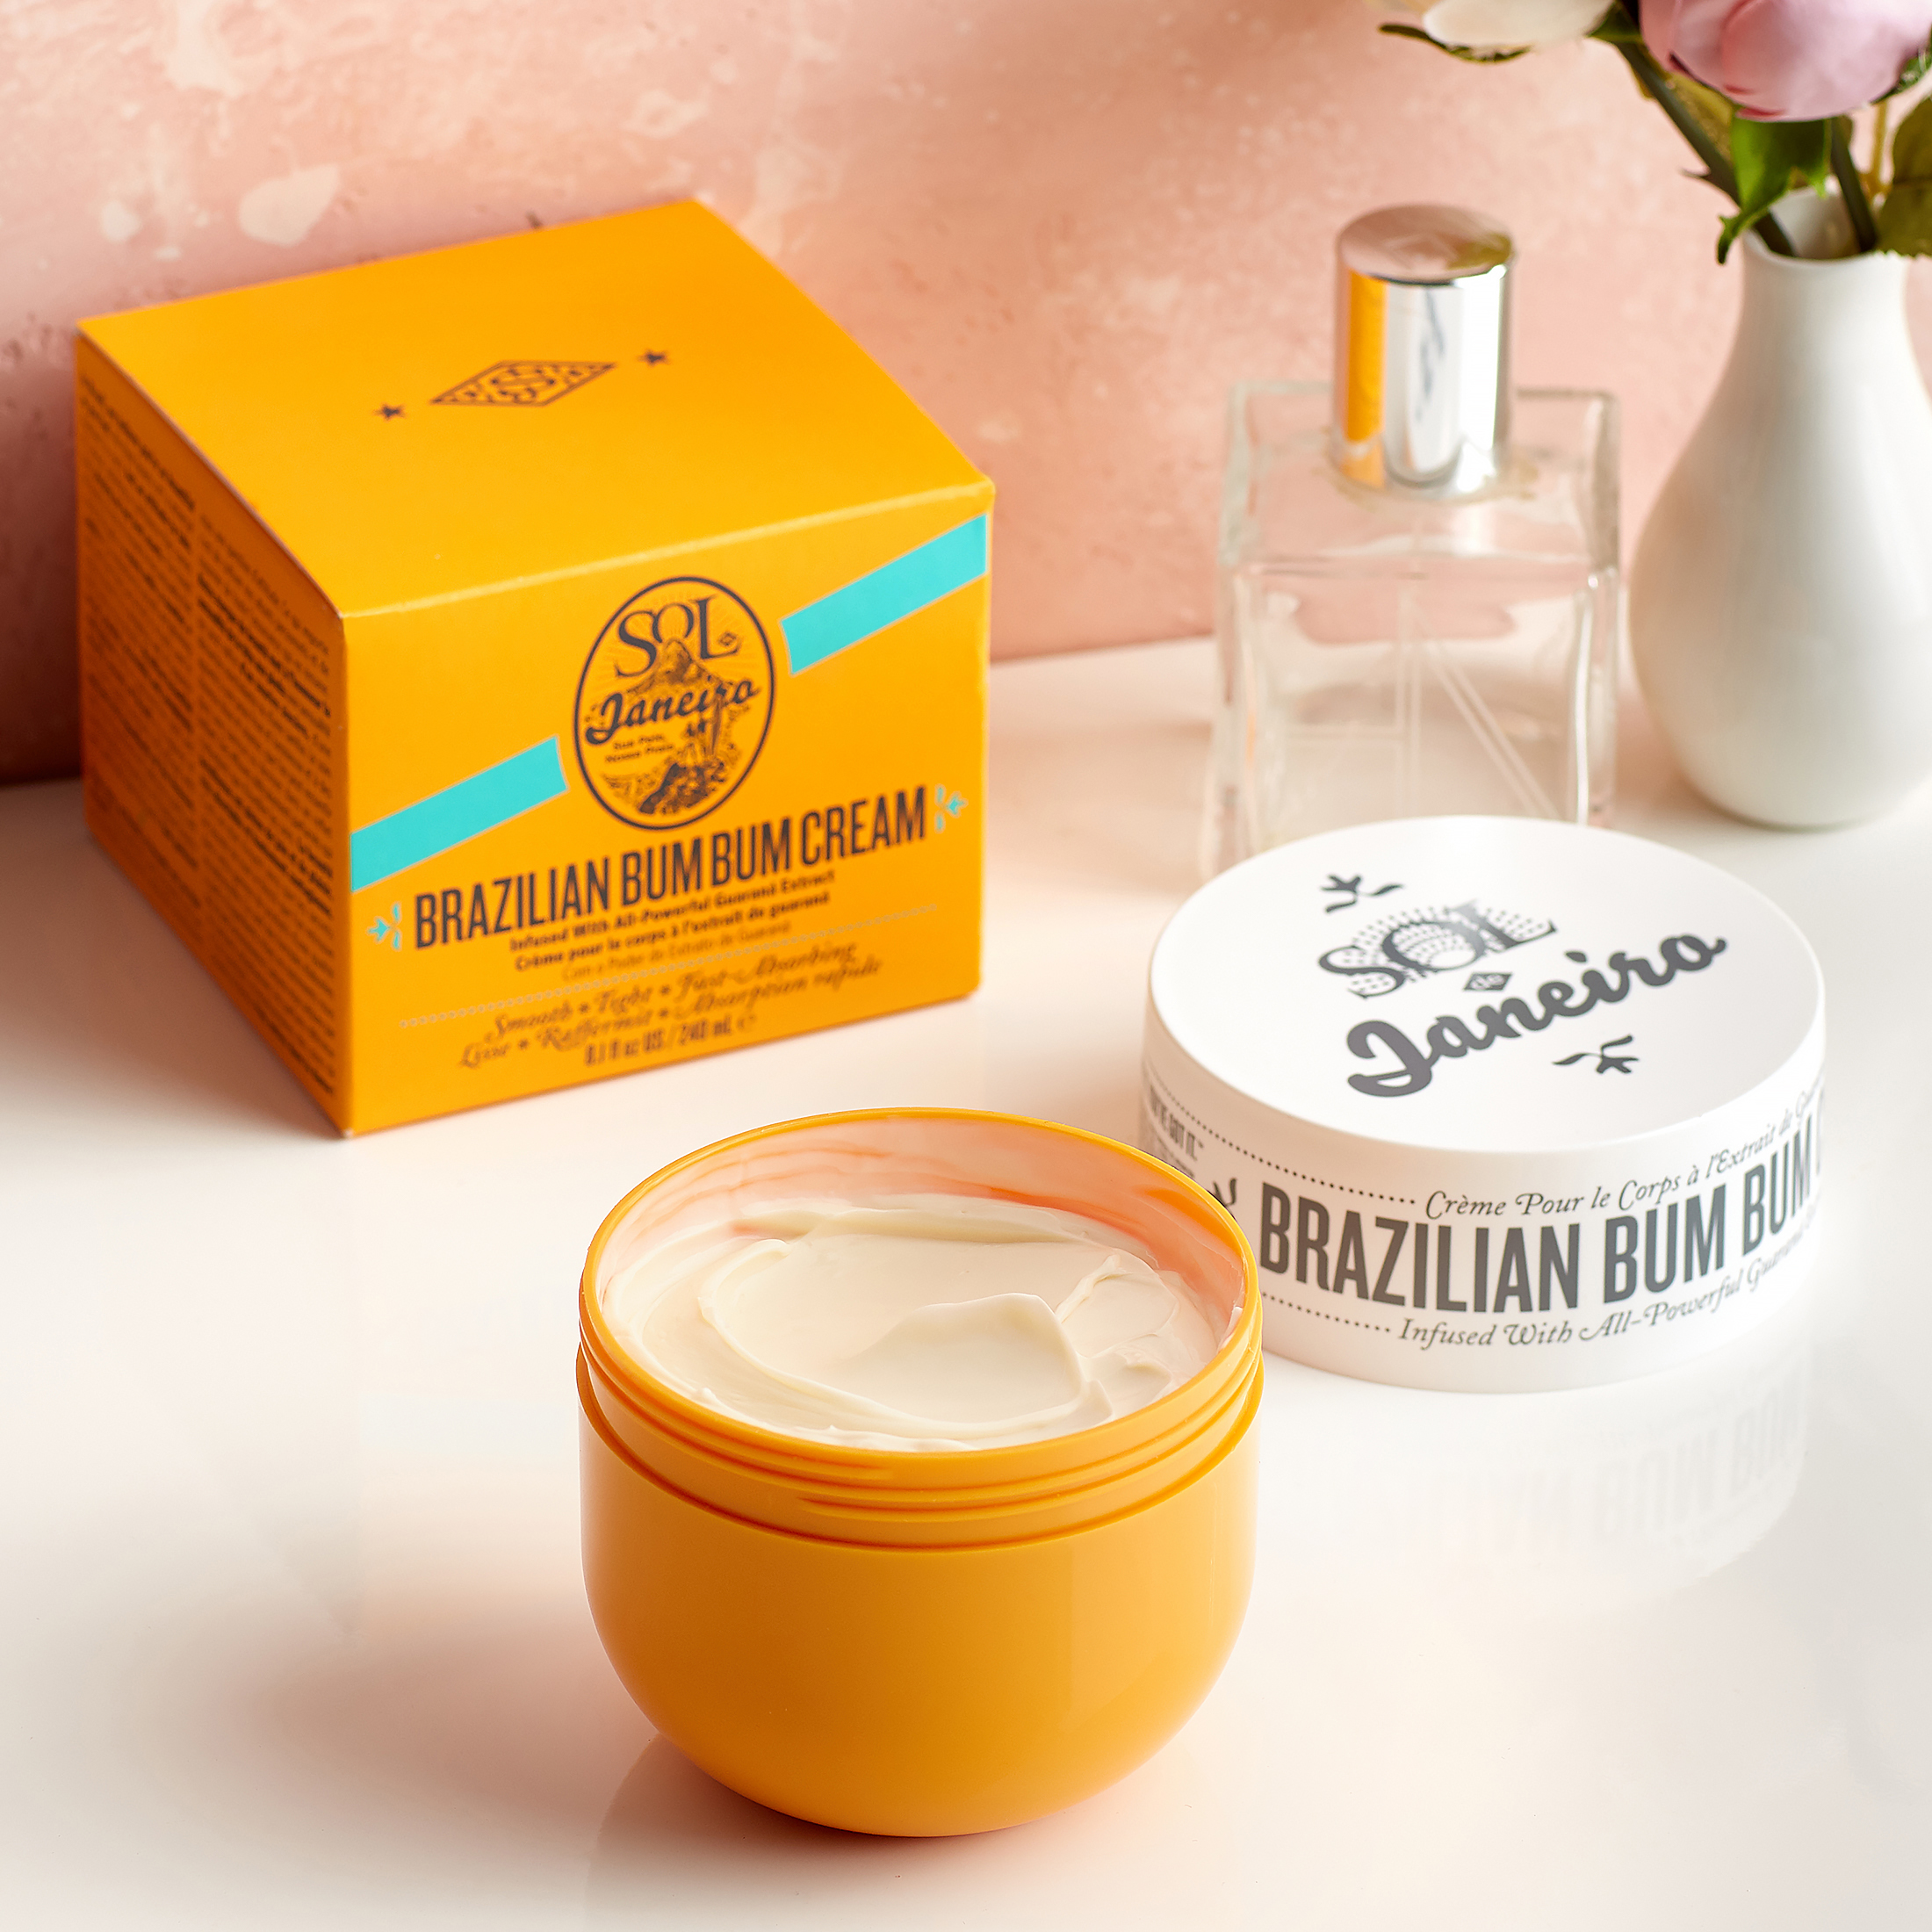 Sol Janeira Brazilian Bum Bum Cream - Stretch Marks 